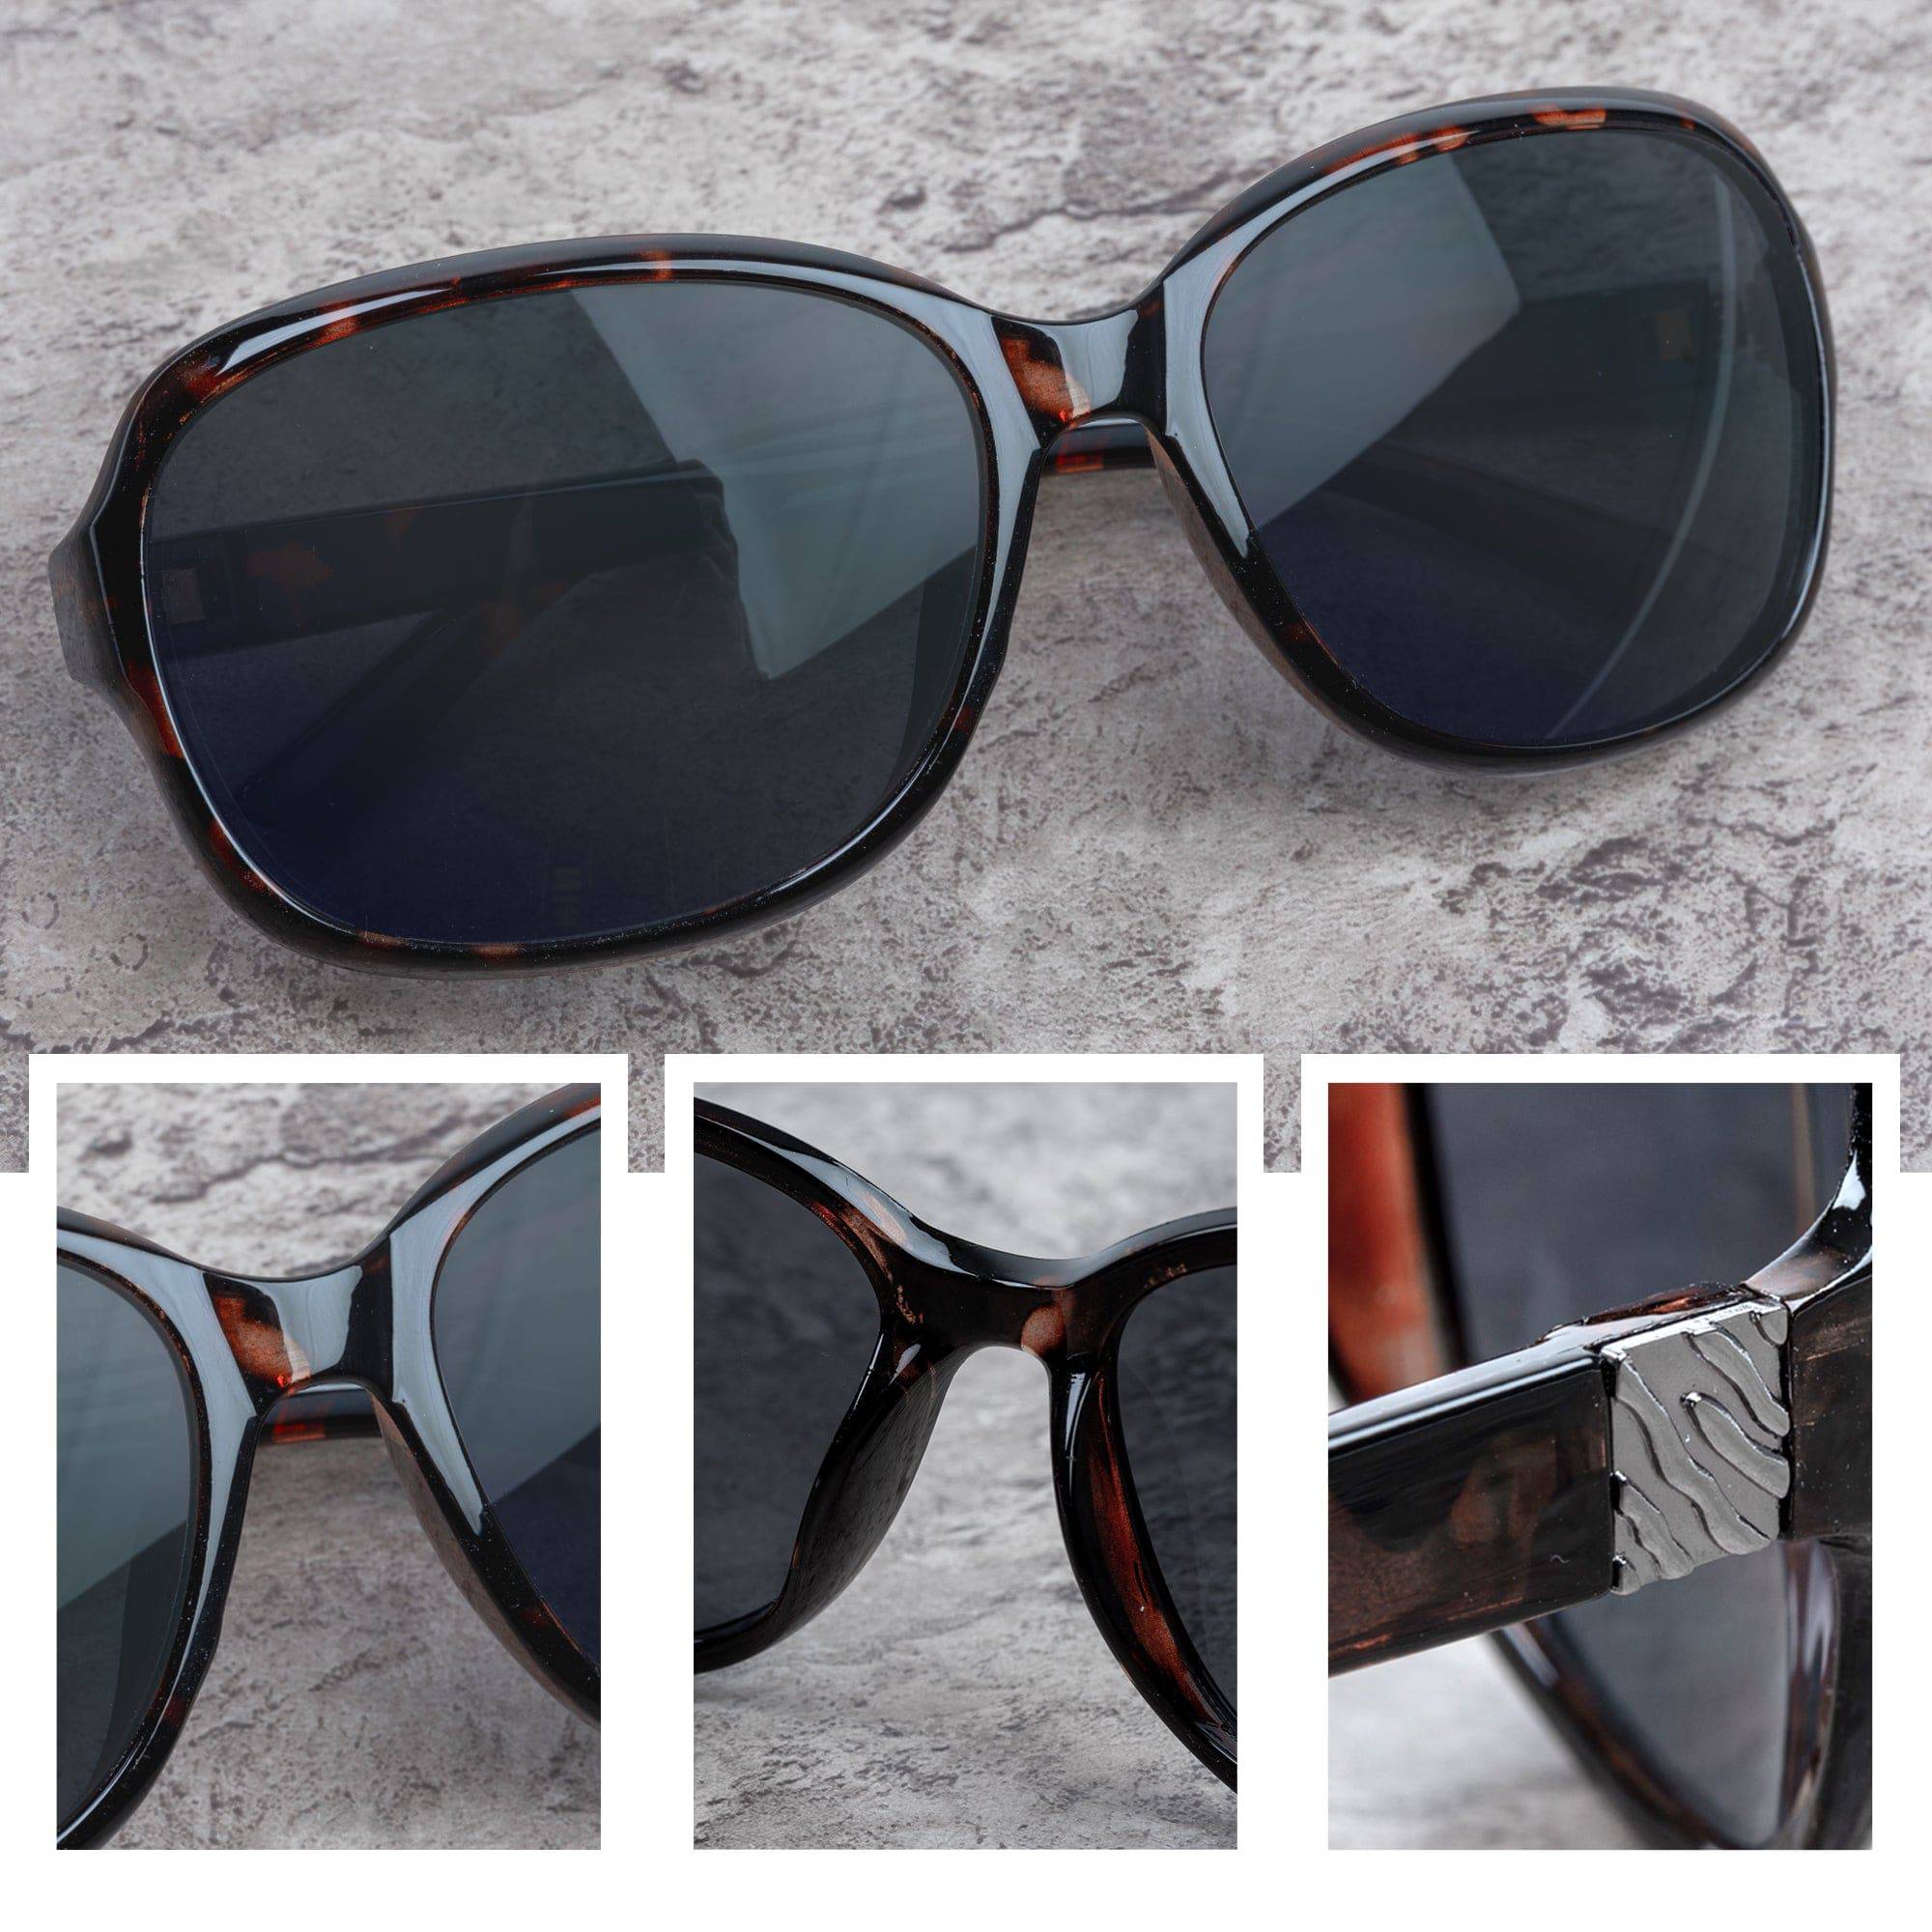 Sunglasses (Black/Orange) - Foster Grant - DSL